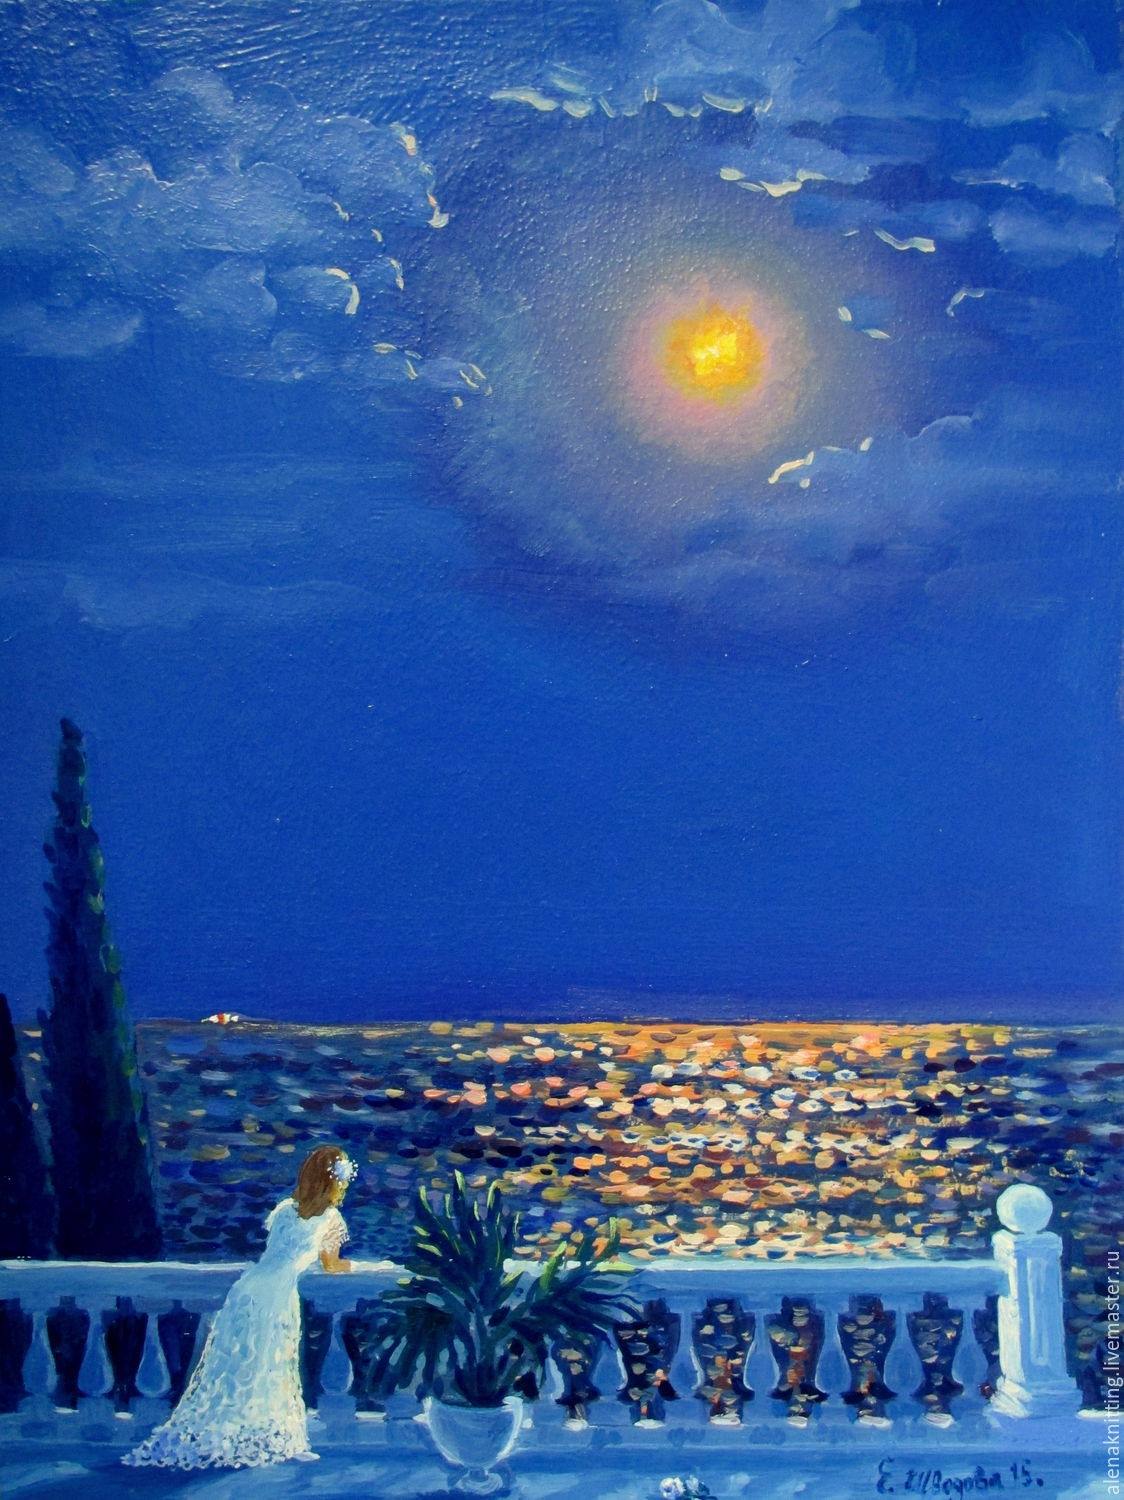 Мелодия лунная соната. Хаустон картина Лунная Соната. Ральф Харрис хаустон картина Лунная Соната. Картина "Лунная Соната" 2021.